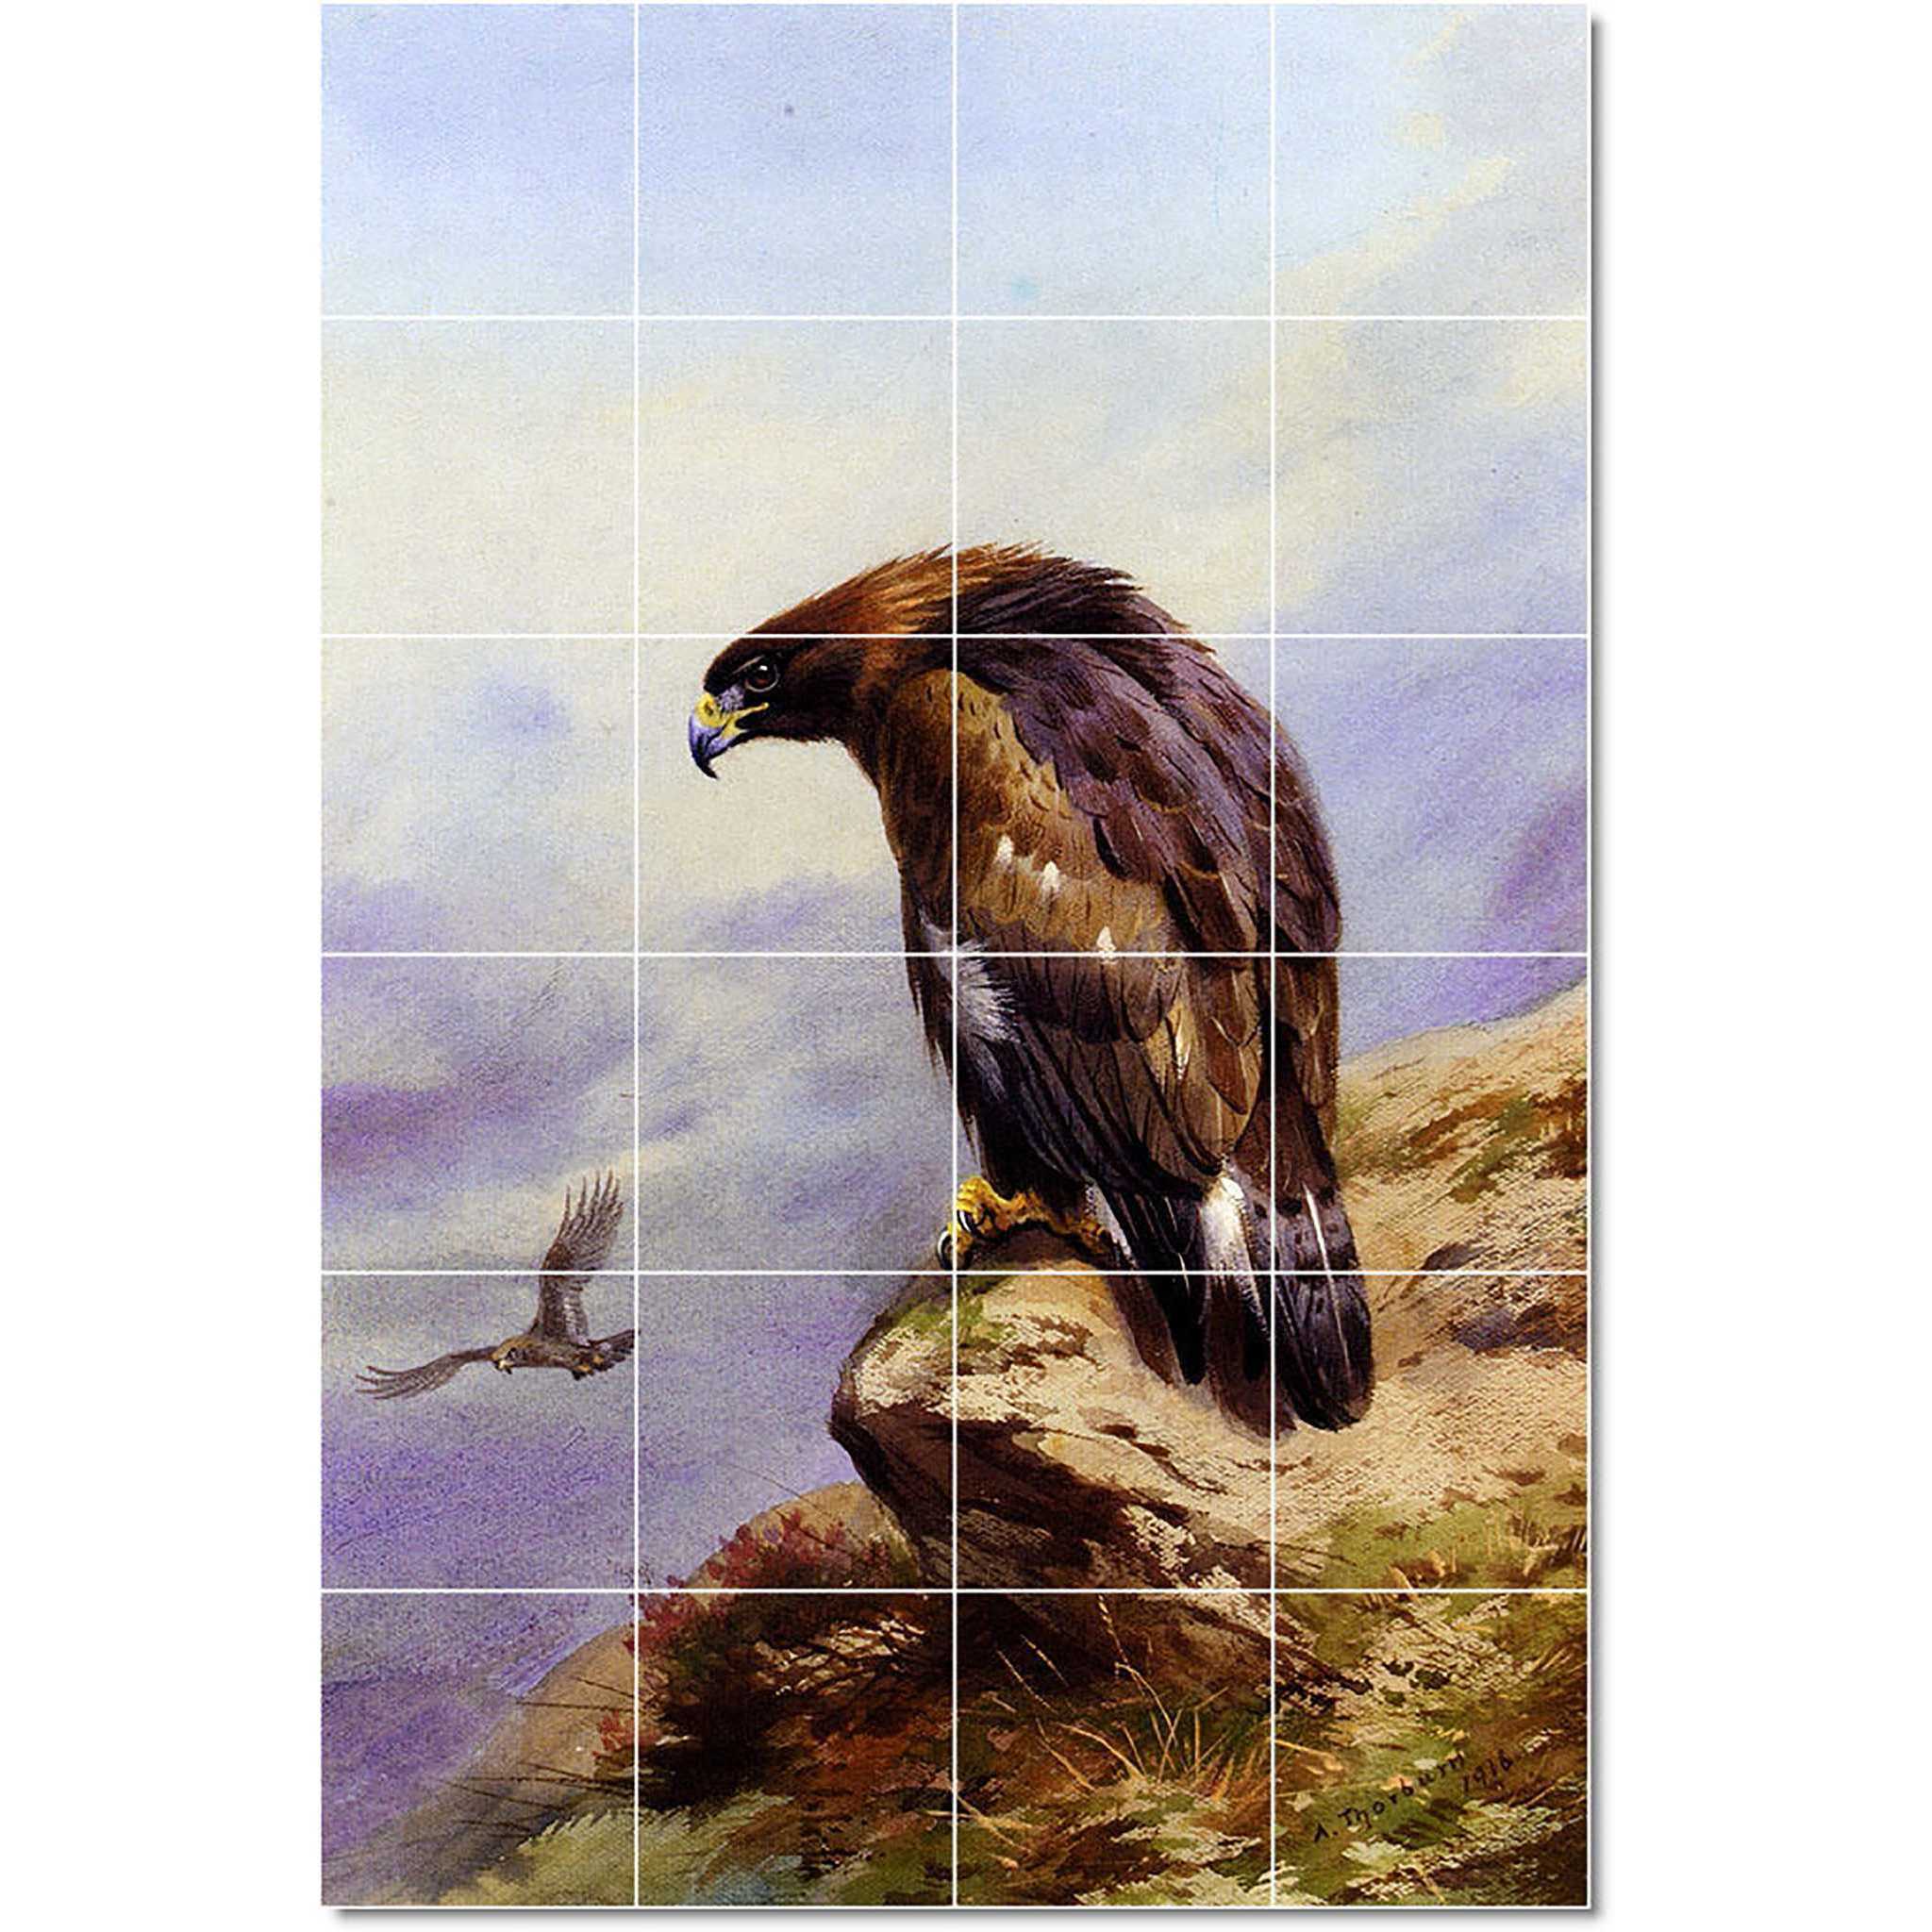 archibald thorburn bird painting ceramic tile mural p23190